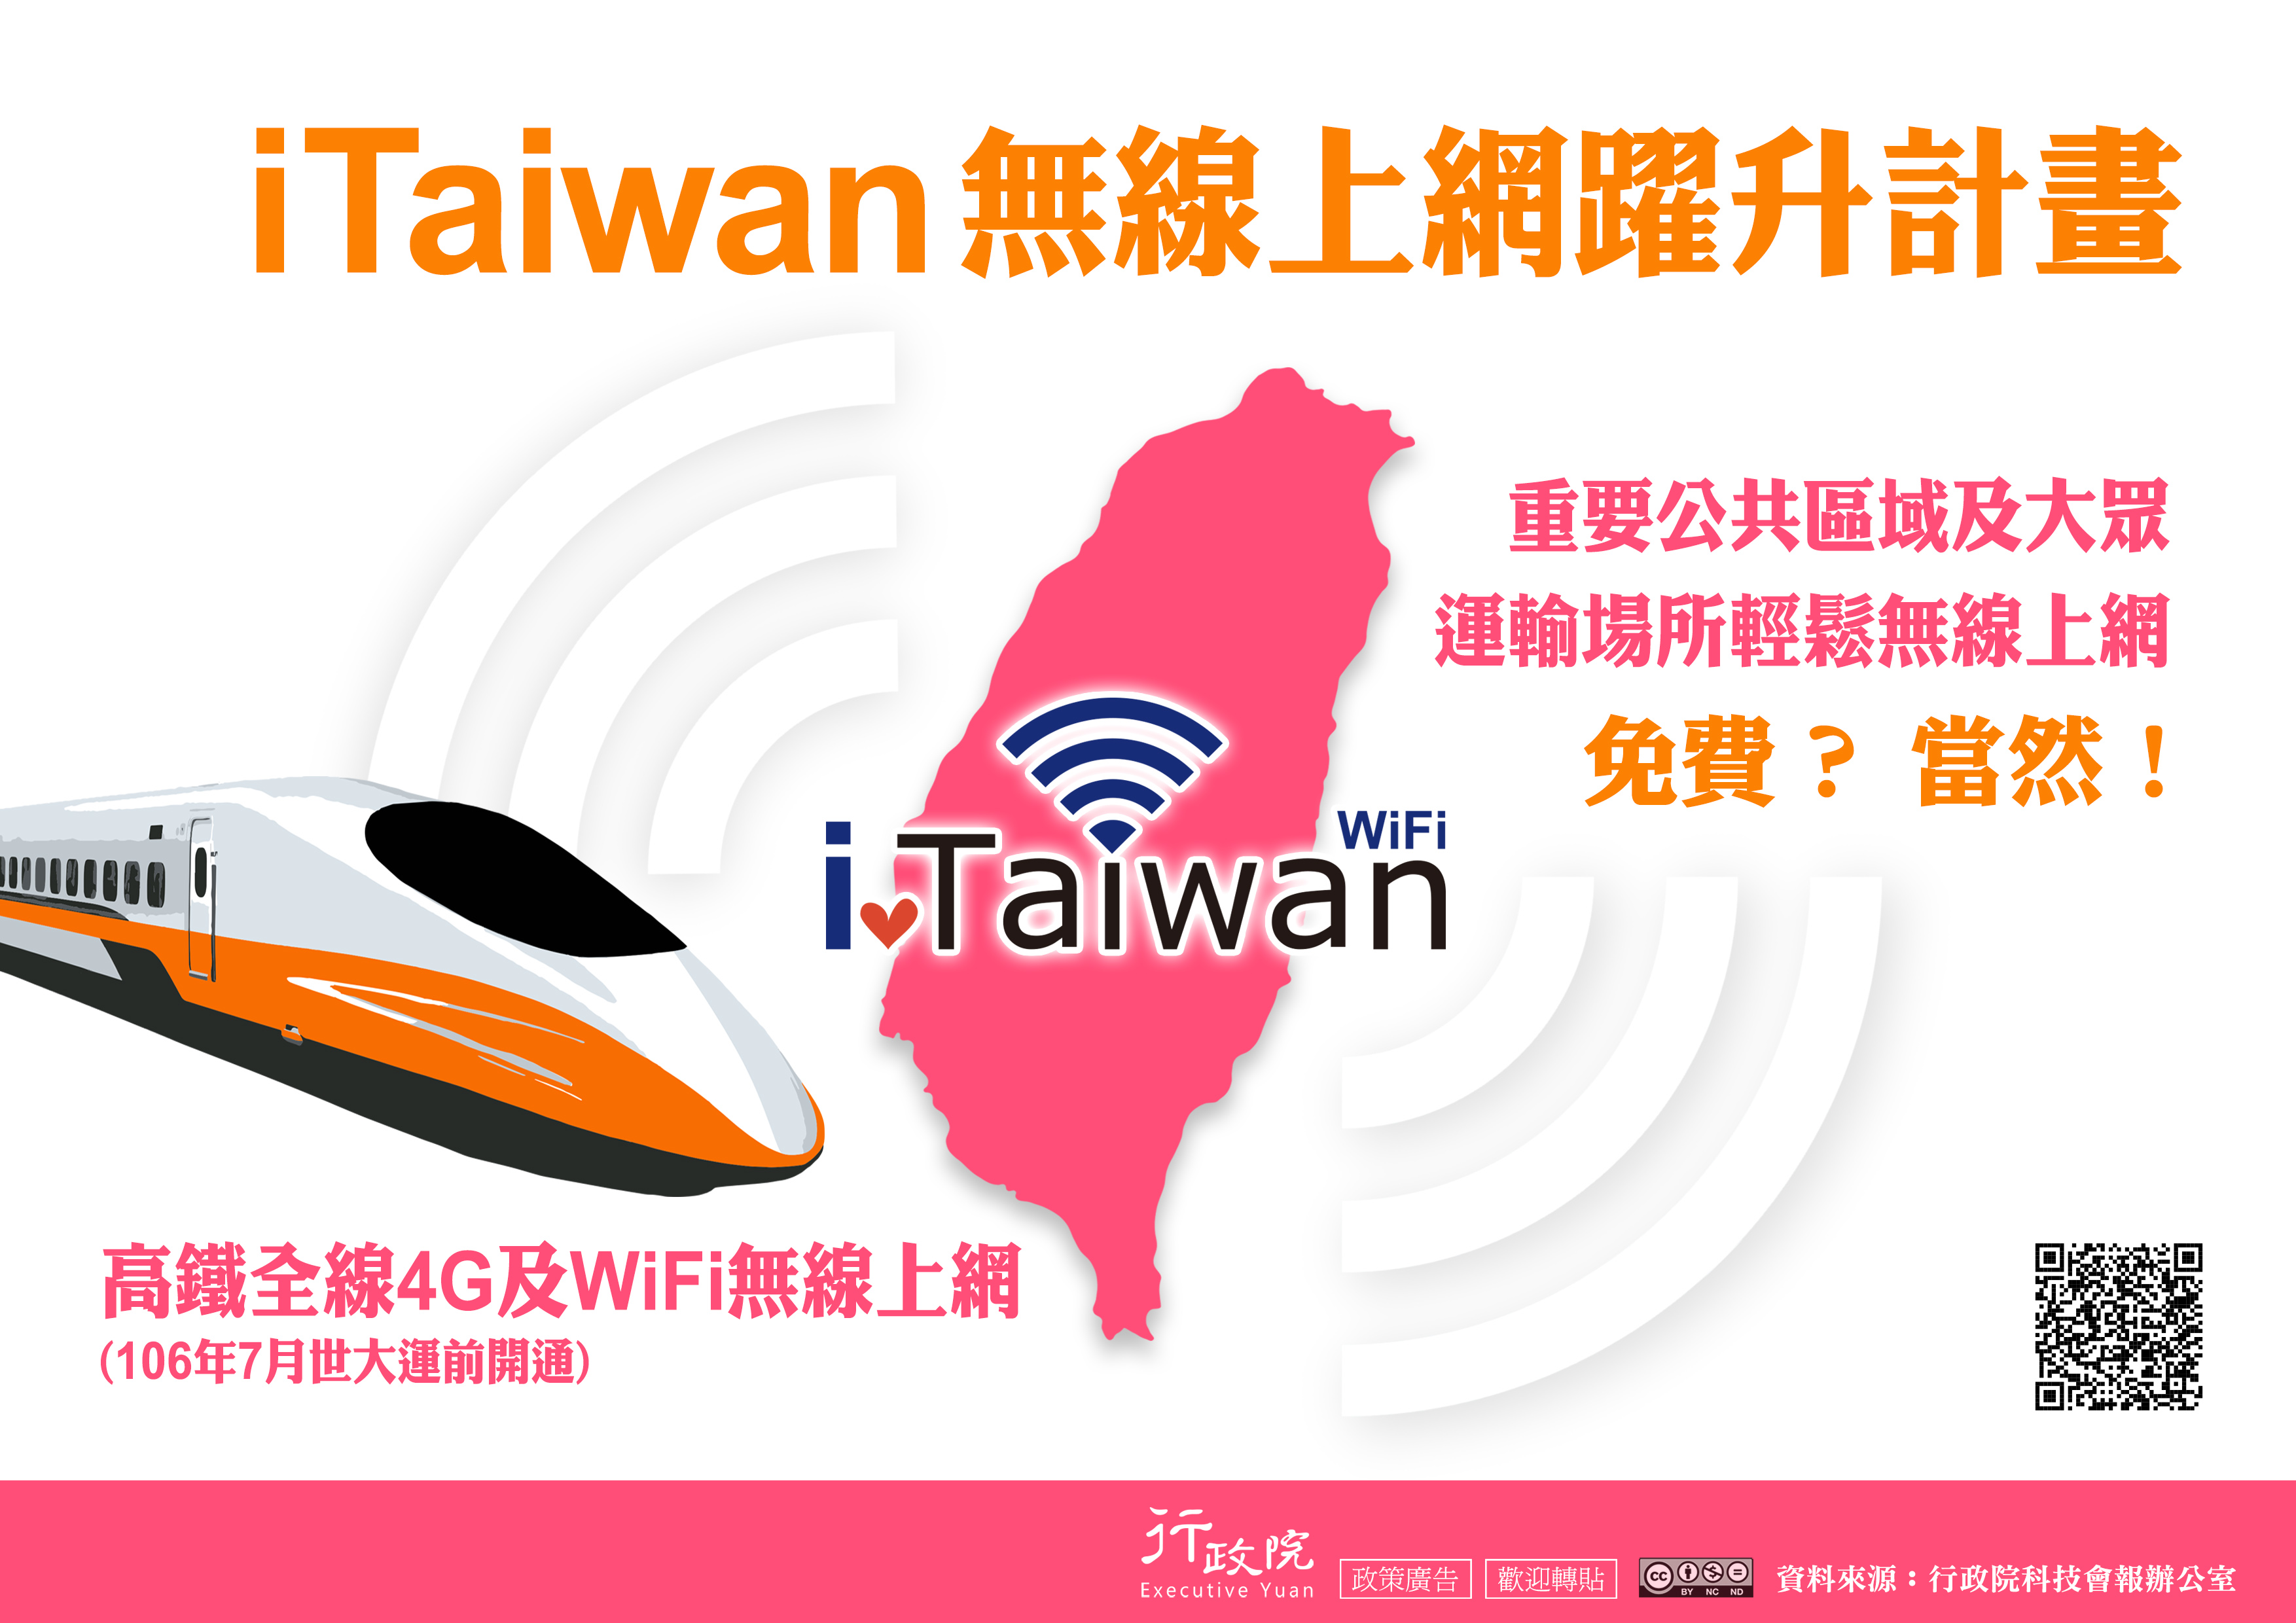 iTaiwan無線上網躍升計畫圖檔